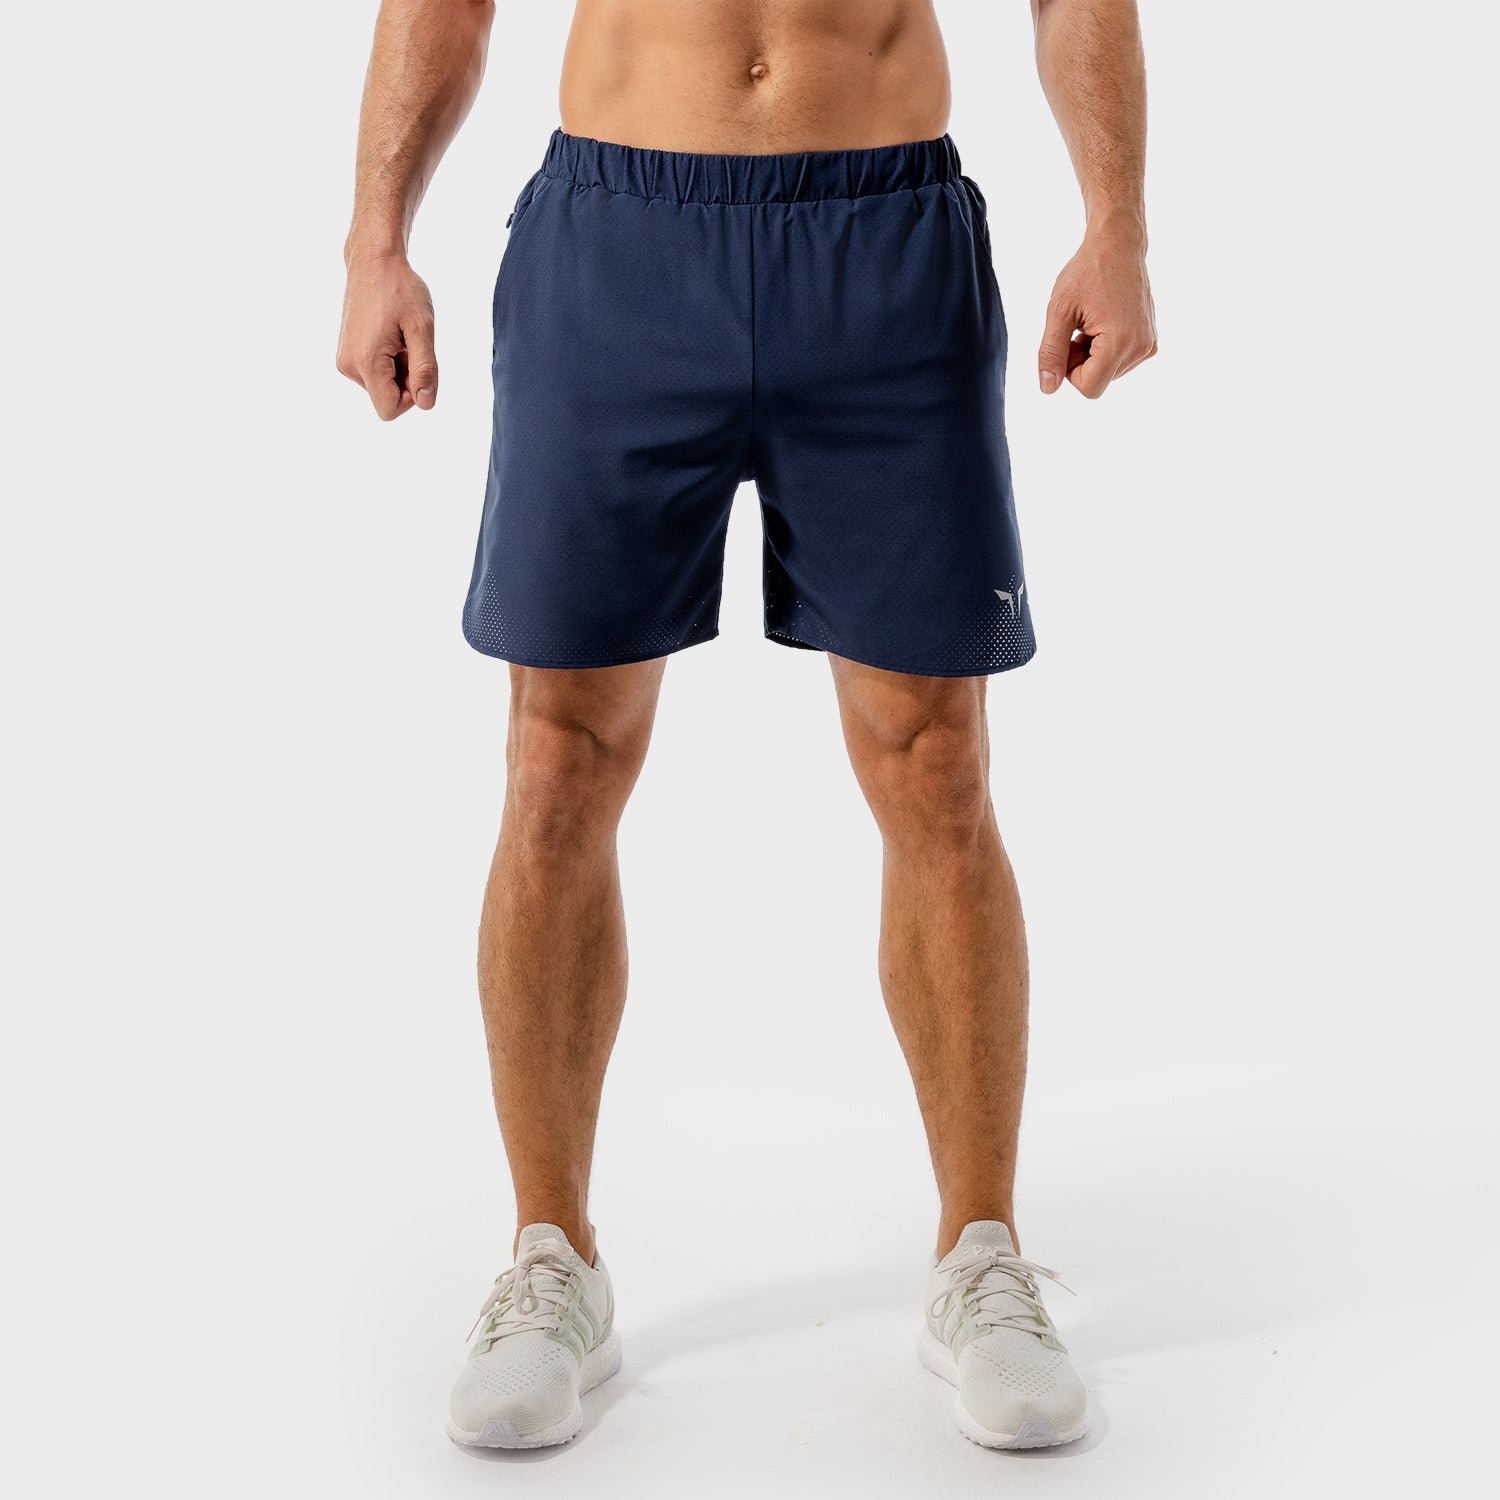 AE | 2-in-1 Dry Tech Shorts 2.0 - Blue | Gym Shorts Men | SQUATWOLF